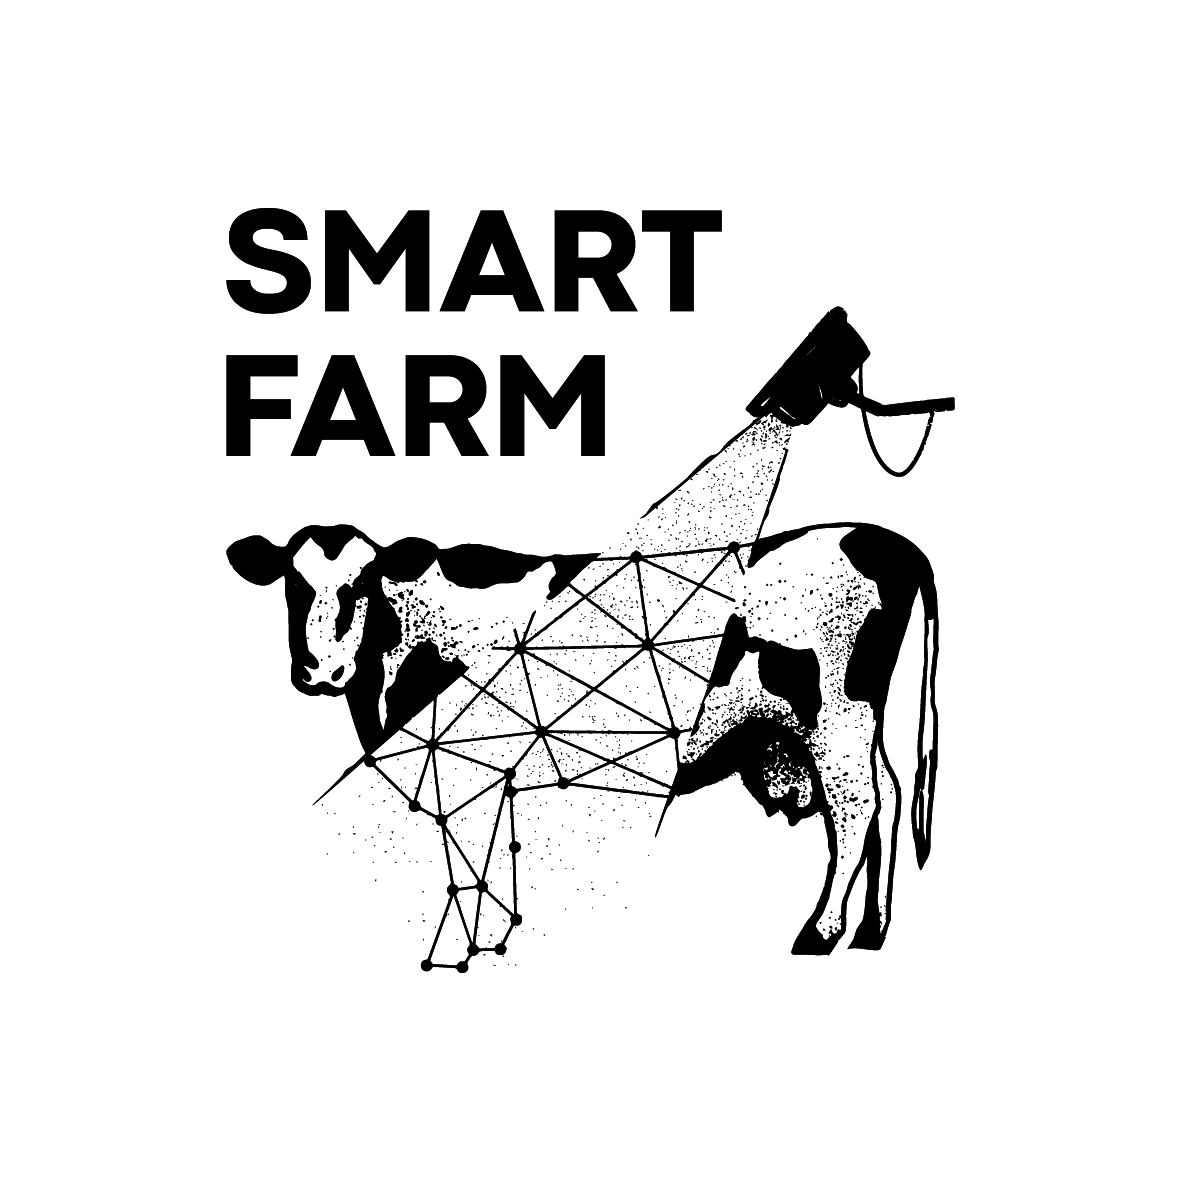 SMART FARM